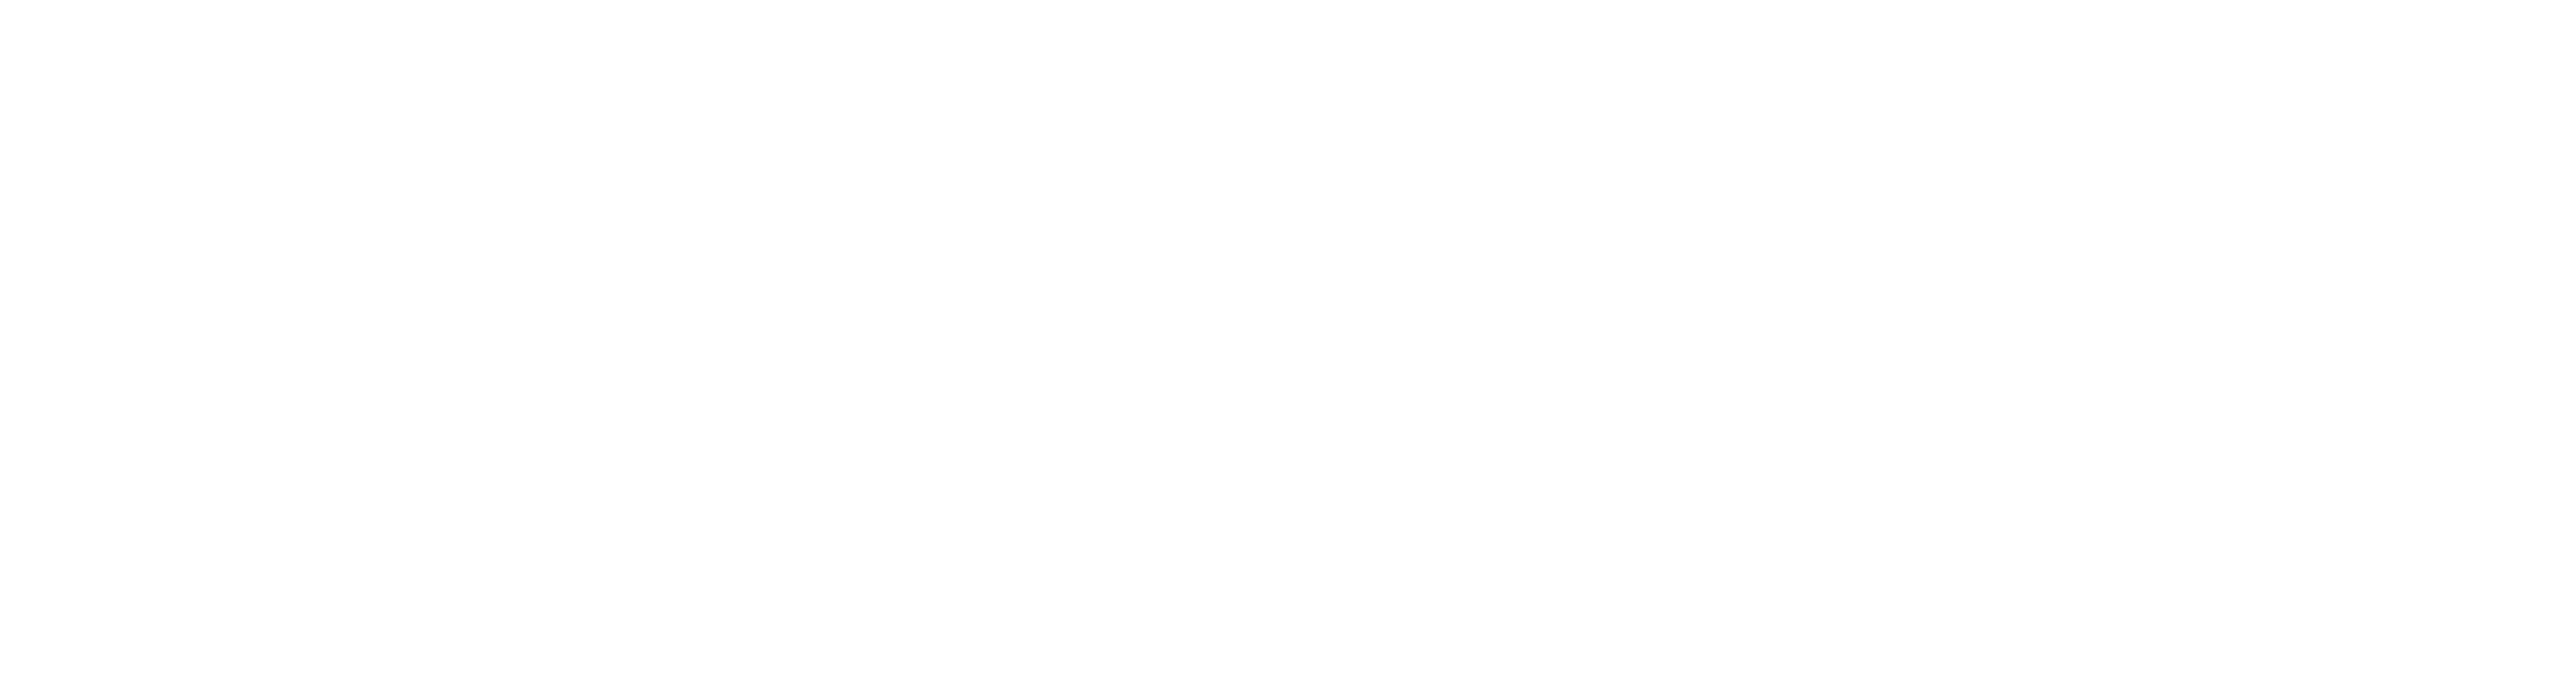 Evine Logo - Evine After Dark